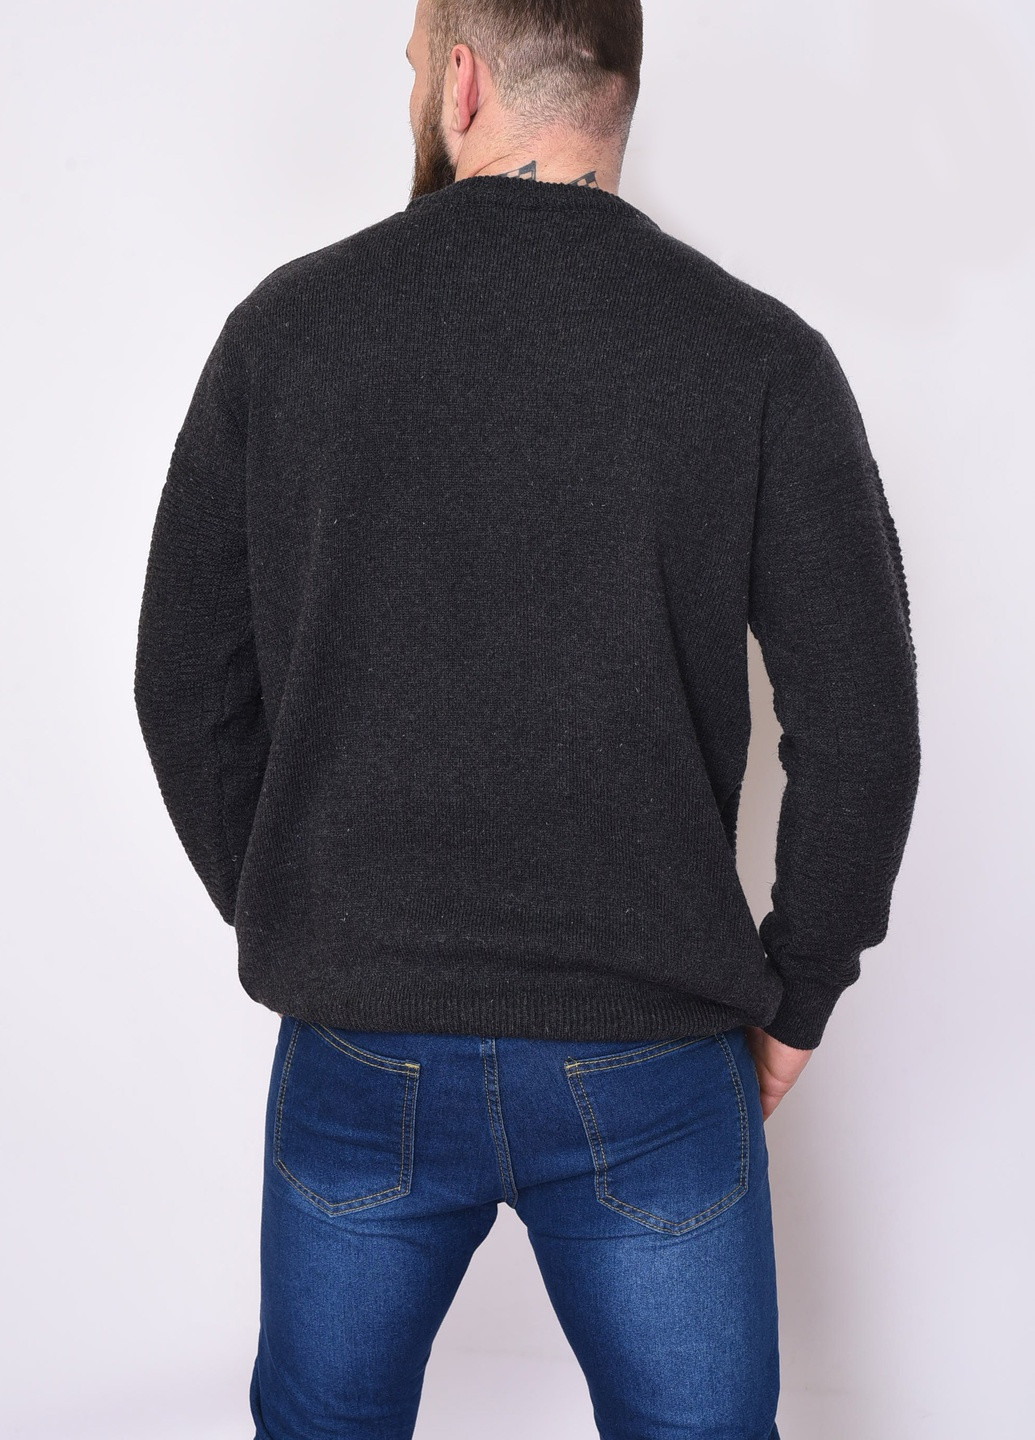 Темно-серый зимний свитер мужской зимний темно-серого цвета Let's Shop